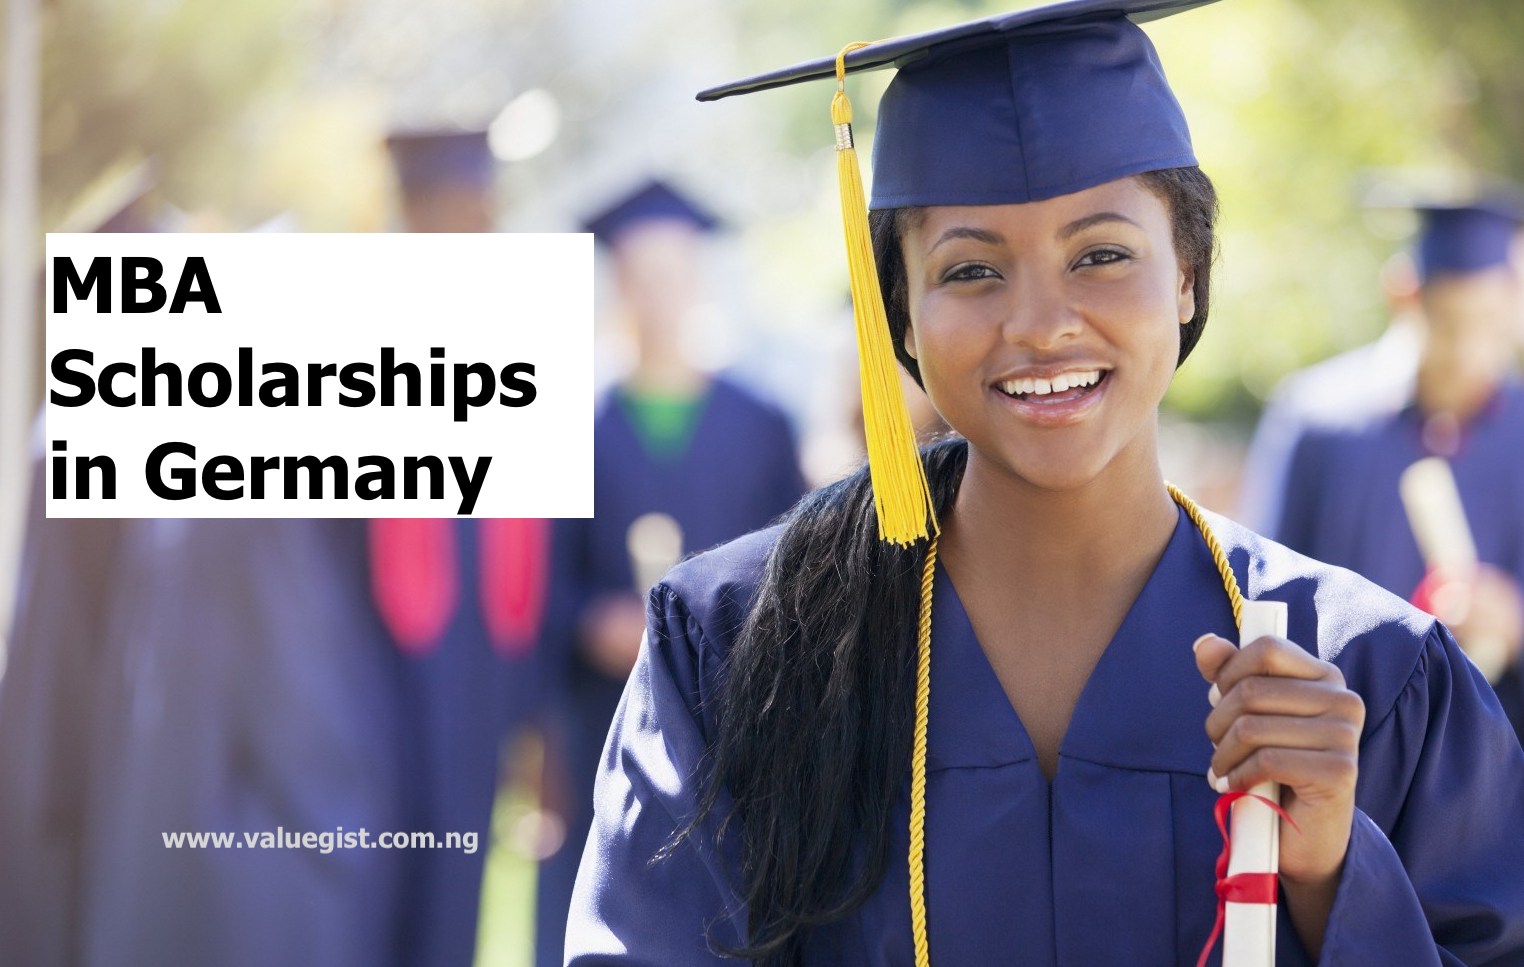 MBA Scholarships in Germany